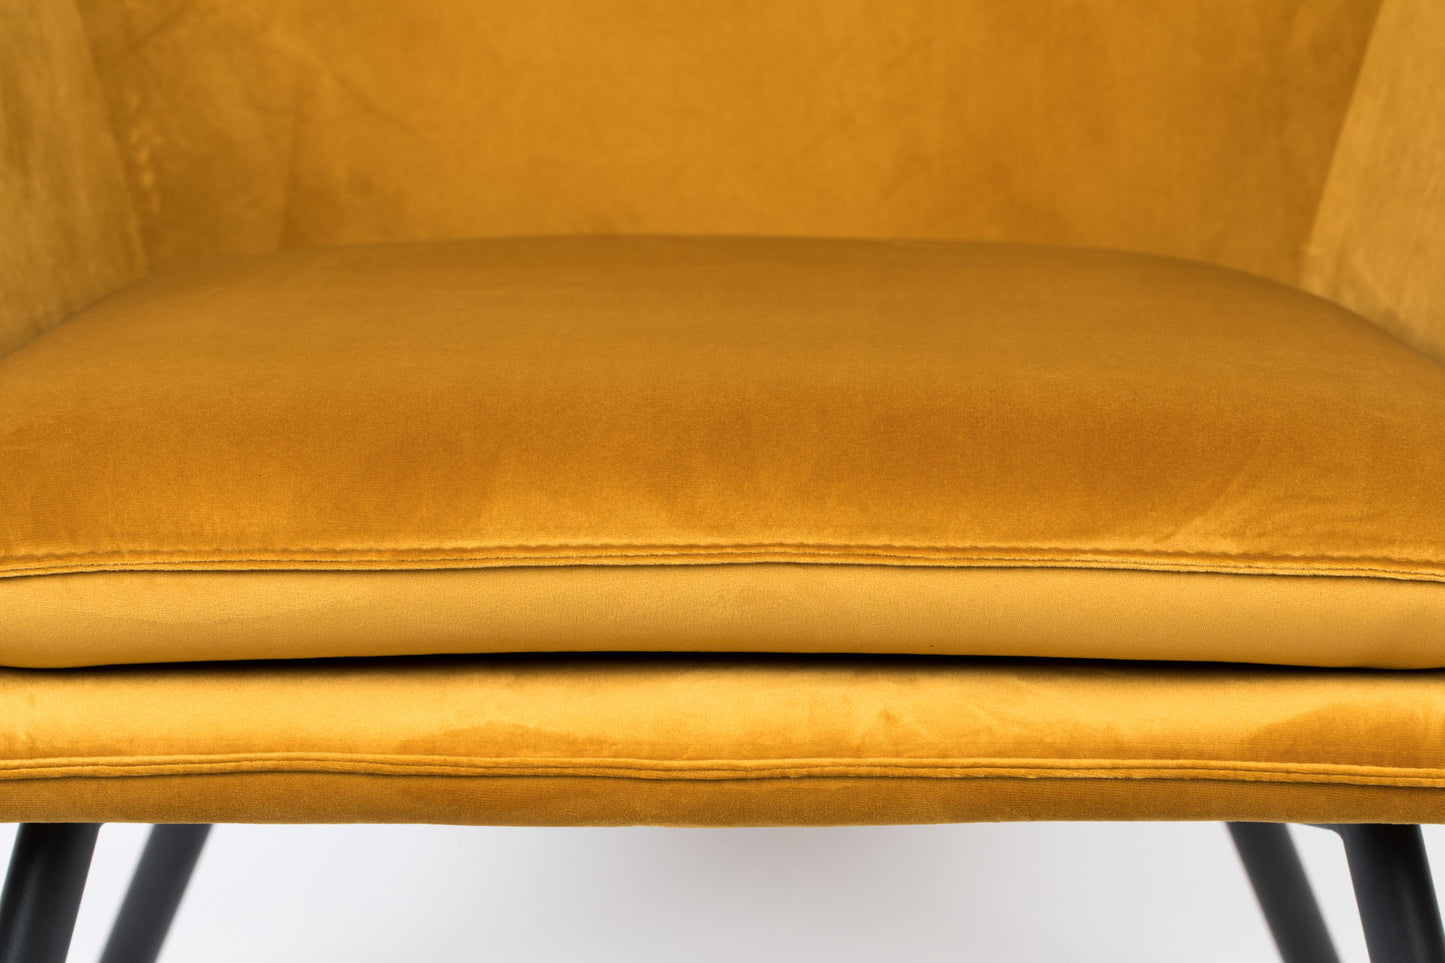 Nancy's Tomball Lounge Chair - Industrial - Gold- Velvet, Iron, Plywood - 76 cm x 80 cm x 78 cm